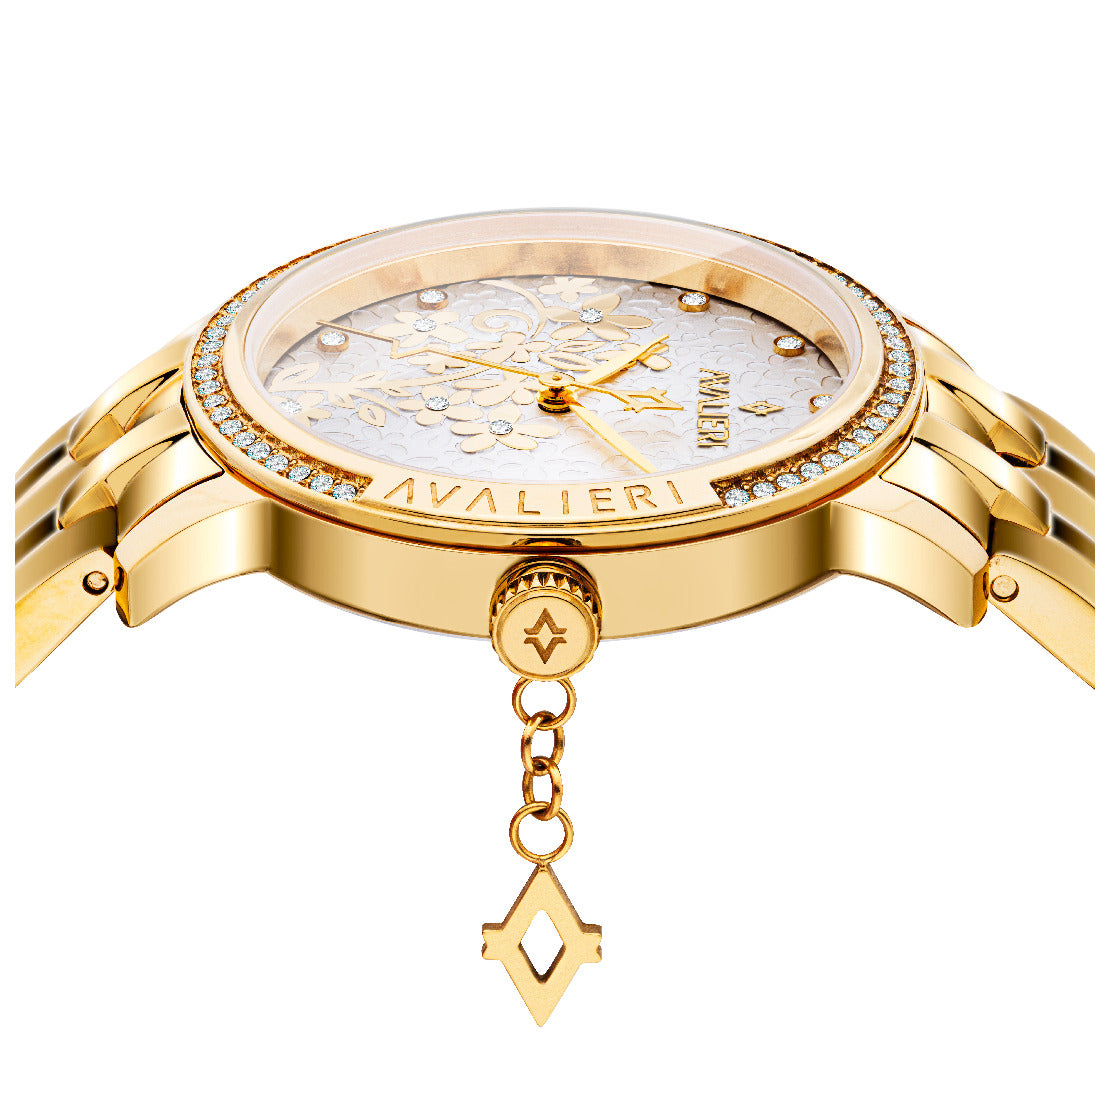 Avalieri Women's Quartz Watch With Silver White Dial - AV-2452B